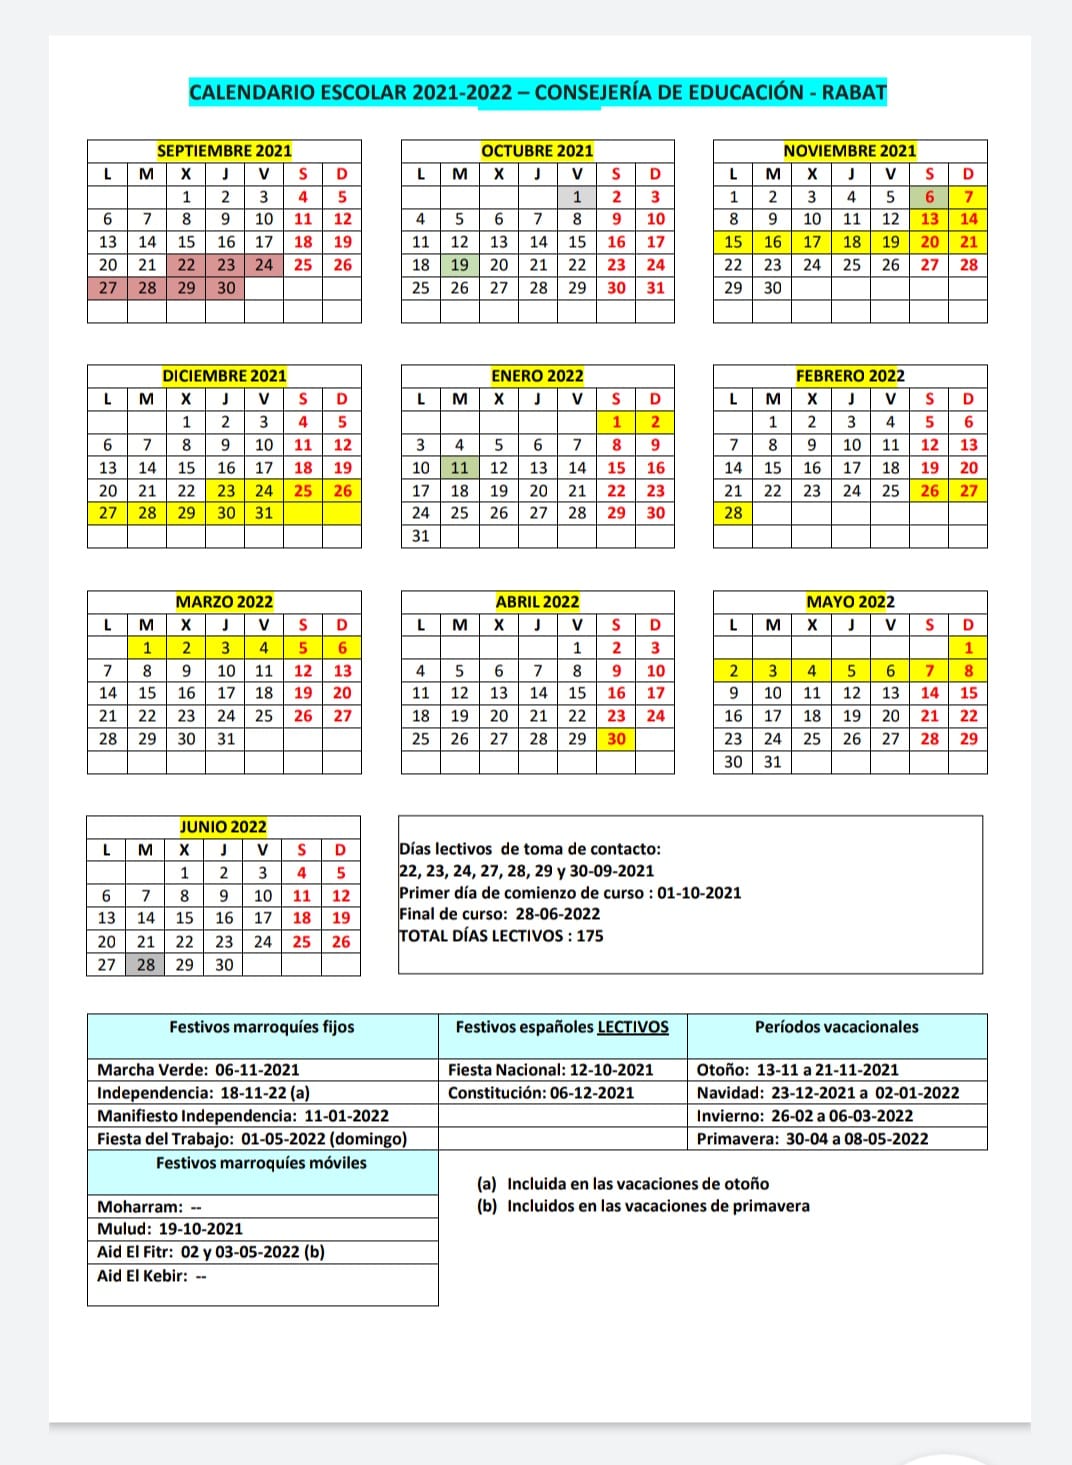 Calendario escolar del curso 2021-2022